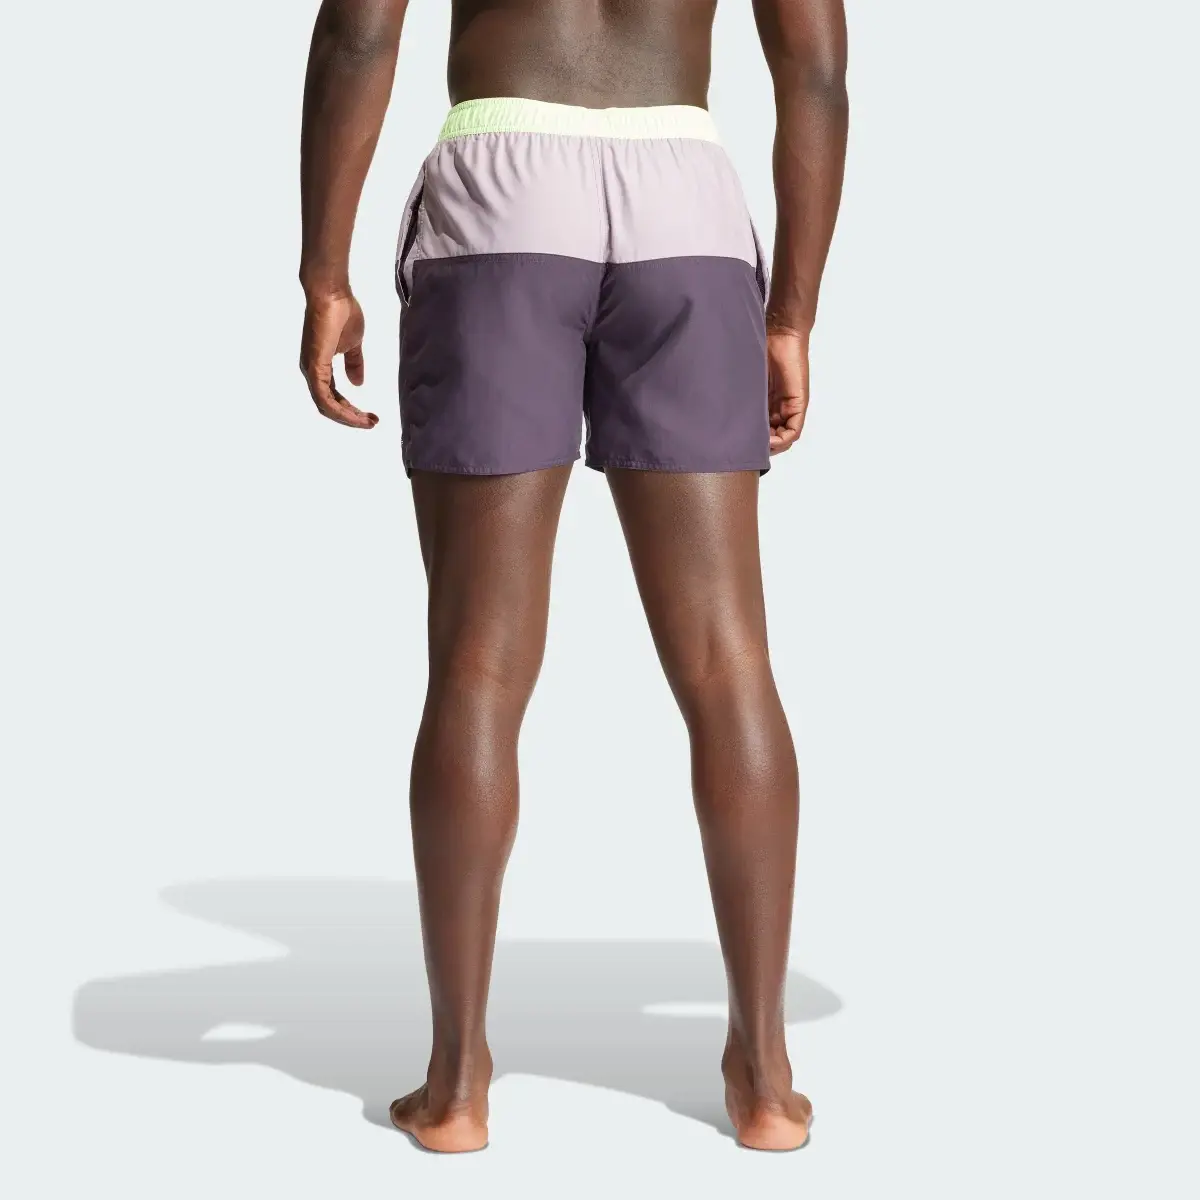 Adidas Colorblock CLX Swim Shorts. 2